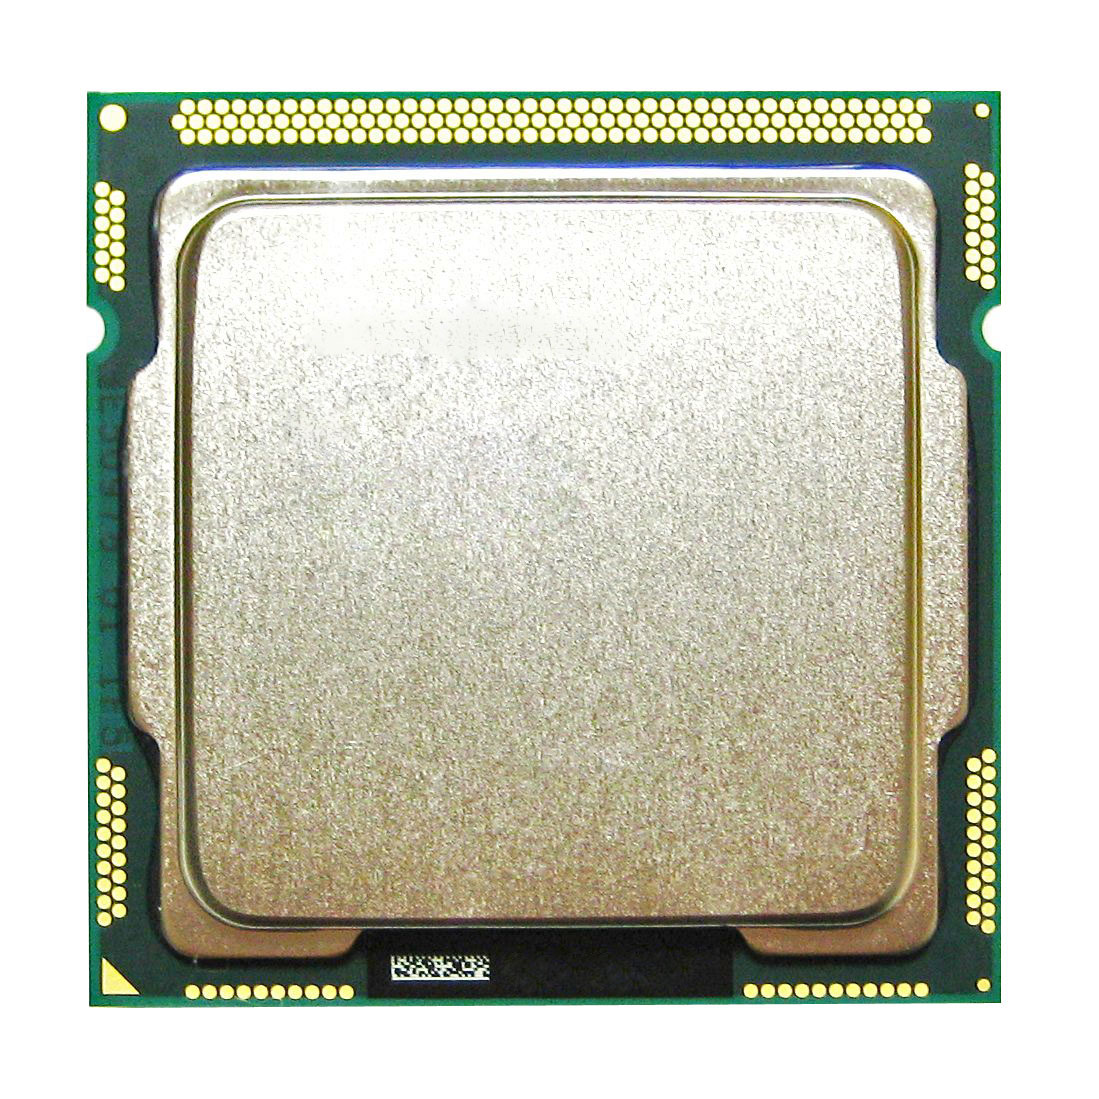 BX359AV HP 2.50GHz 5.00GT/s DMI 6MB L3 Cache Intel Core i5-2400S Quad Core Desktop Processor Upgrade